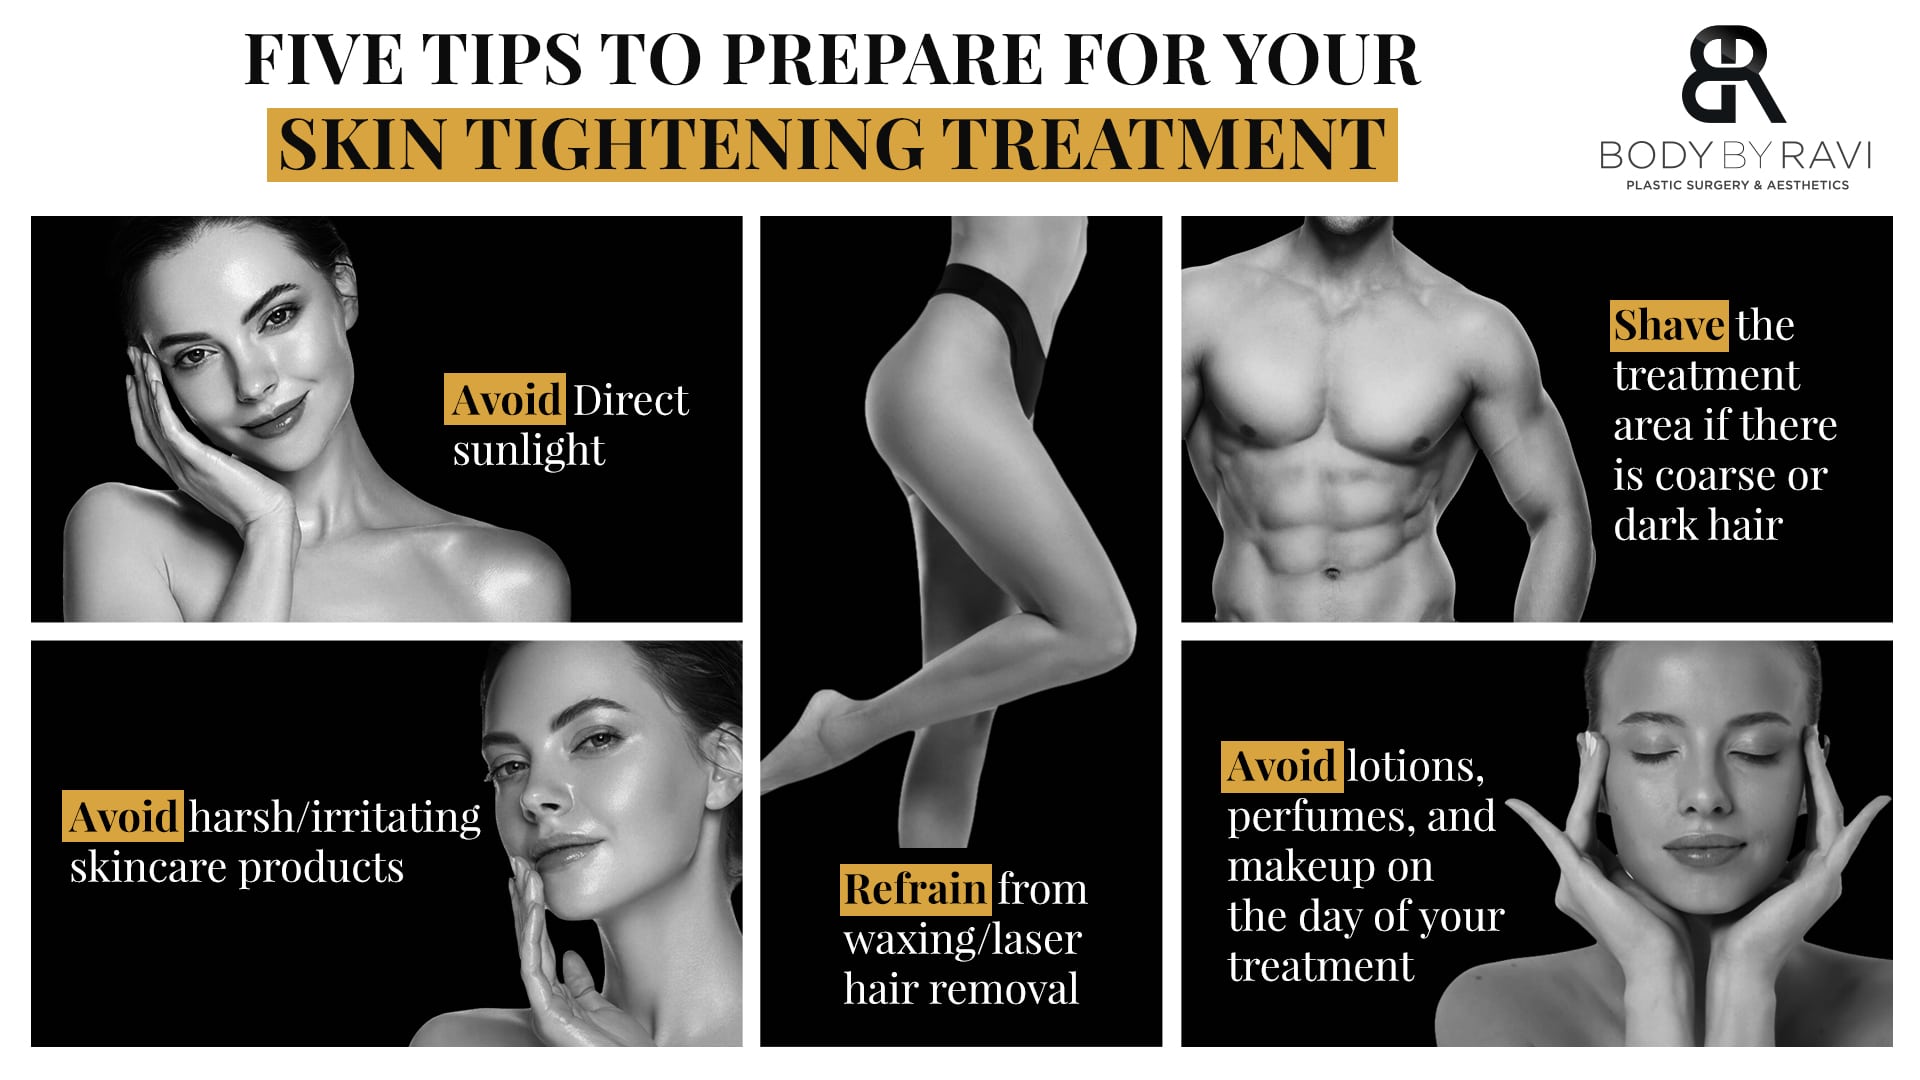 Skin tightening prep infographic
